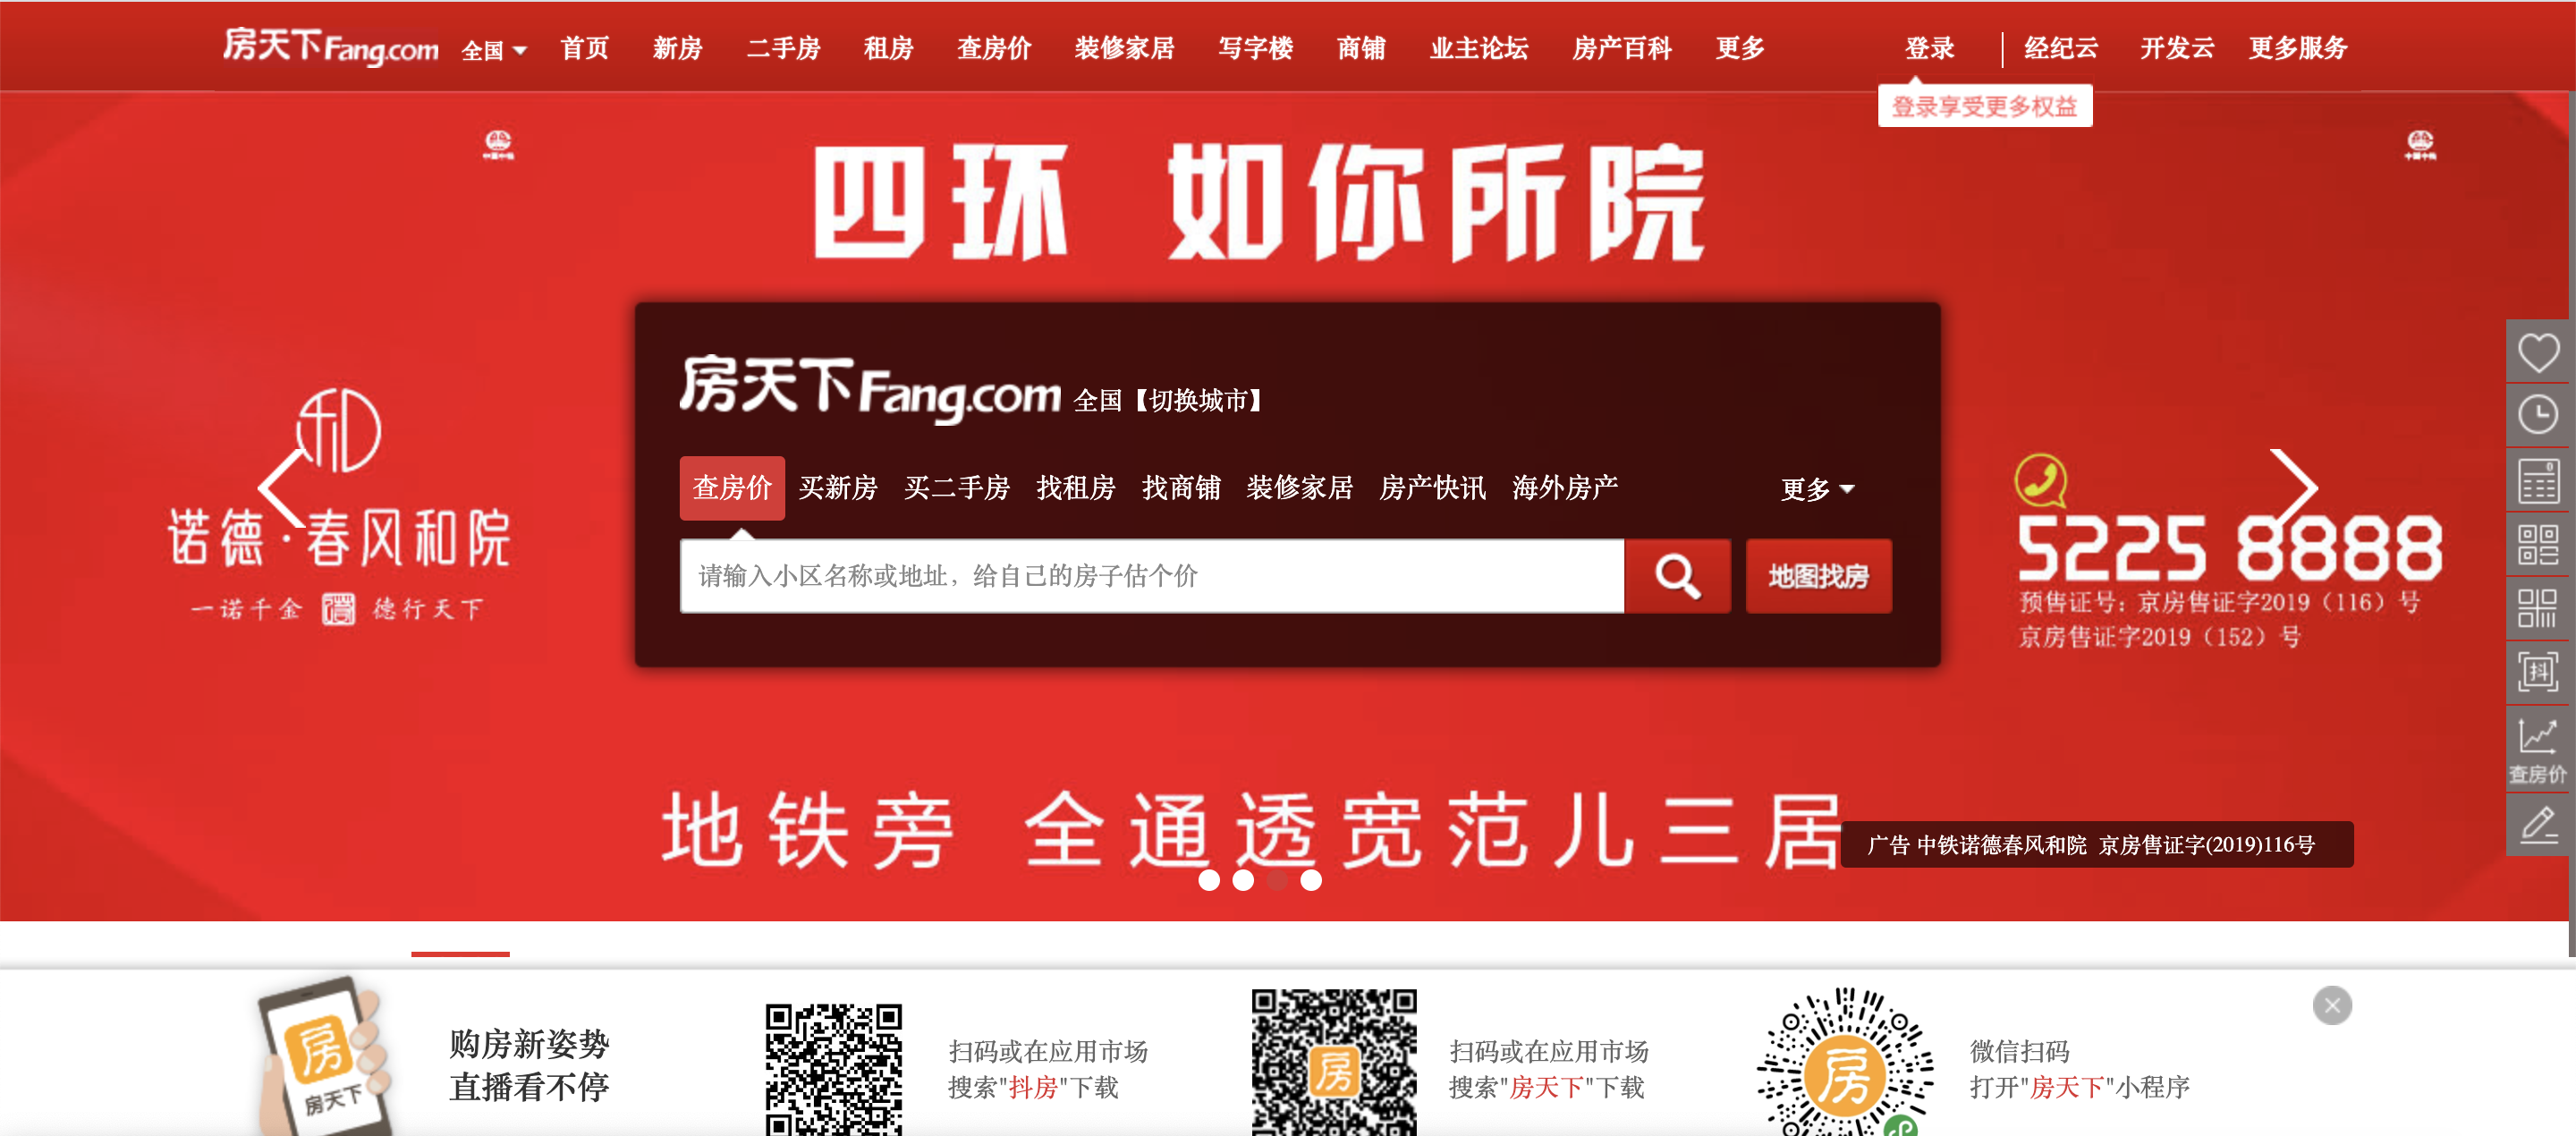 Fang.com property portal in China